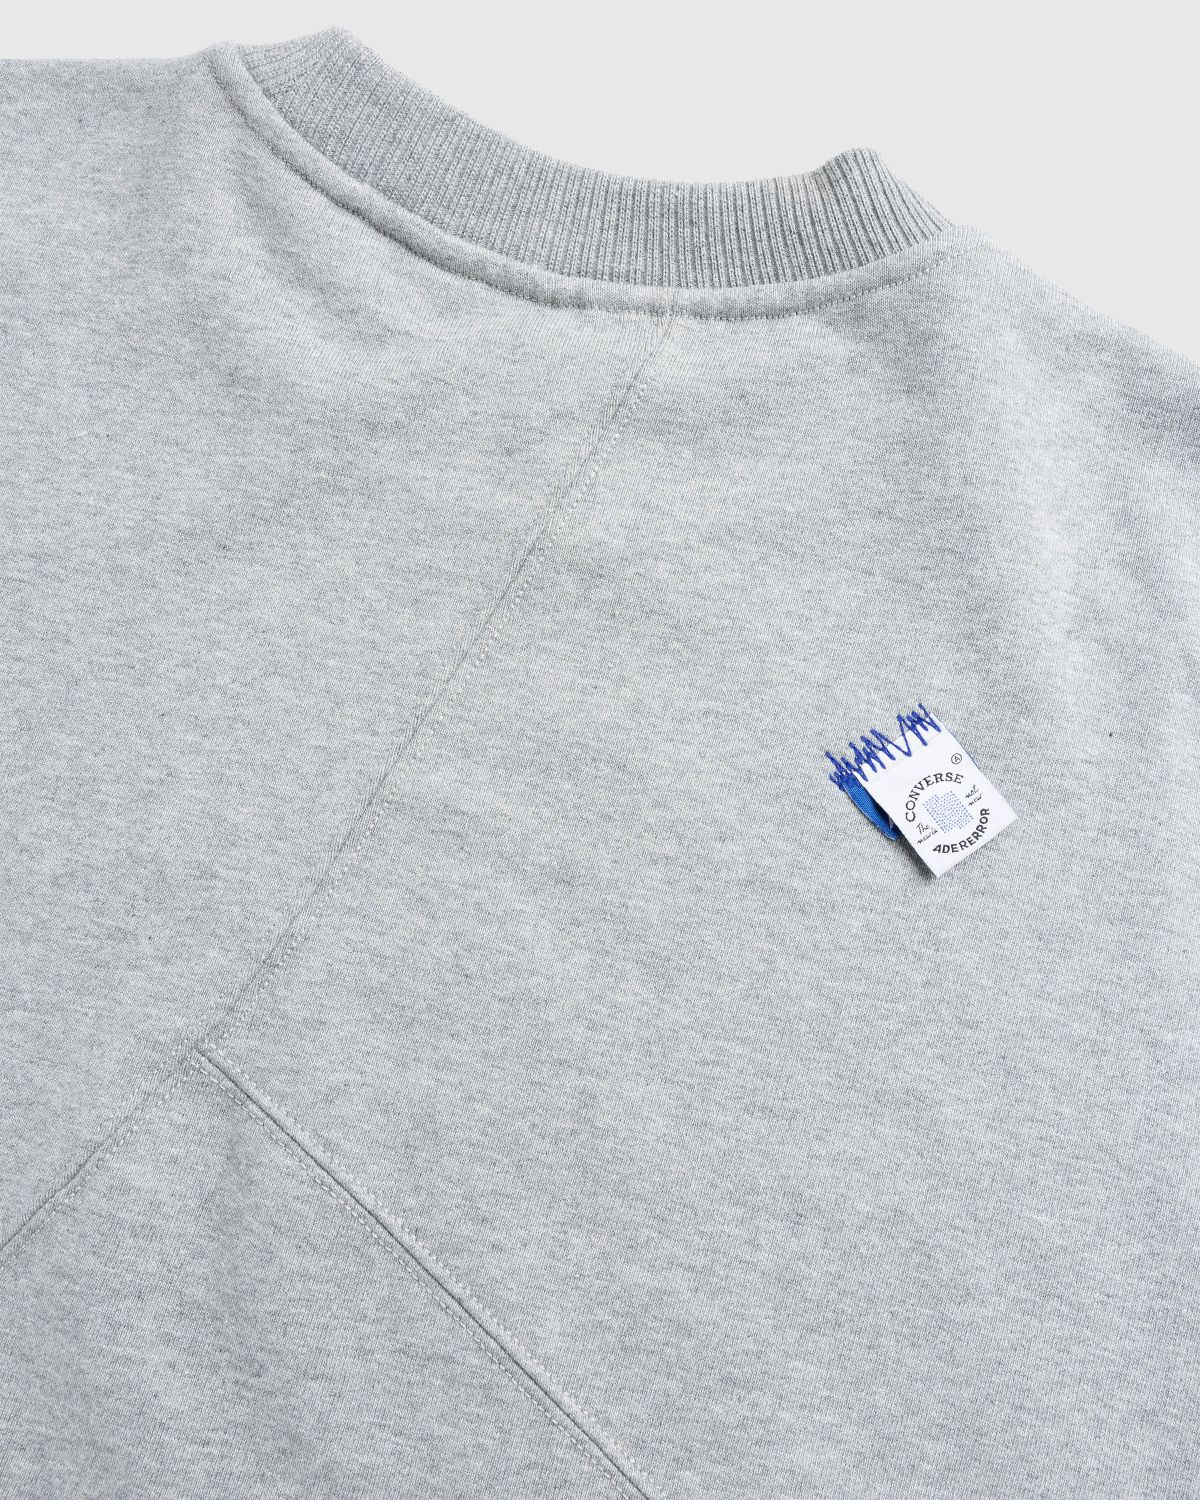 Converse x | Ader Sweatshirt Shapes – Vintage Grey Heather Crew Error Highsnobiety Shop